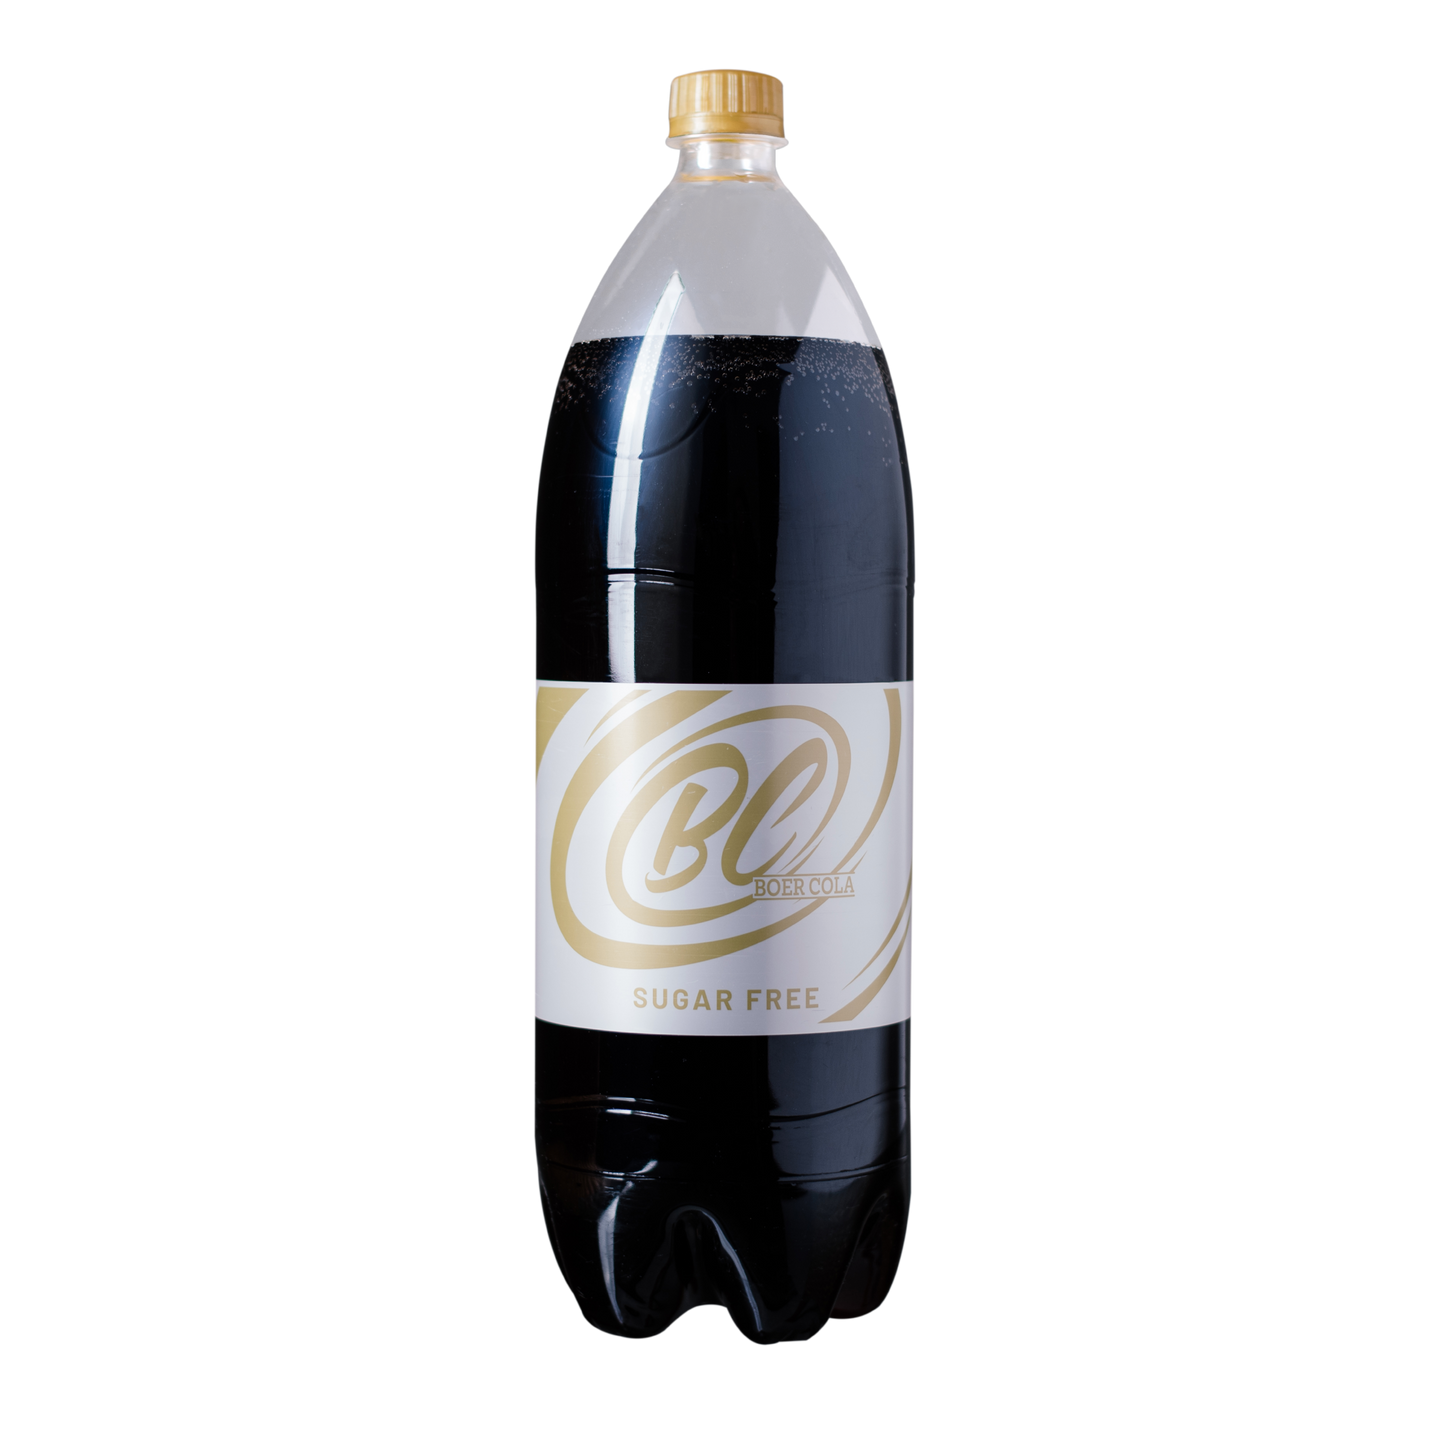 Boer Cola Sugar Free 2L Bottle (1)